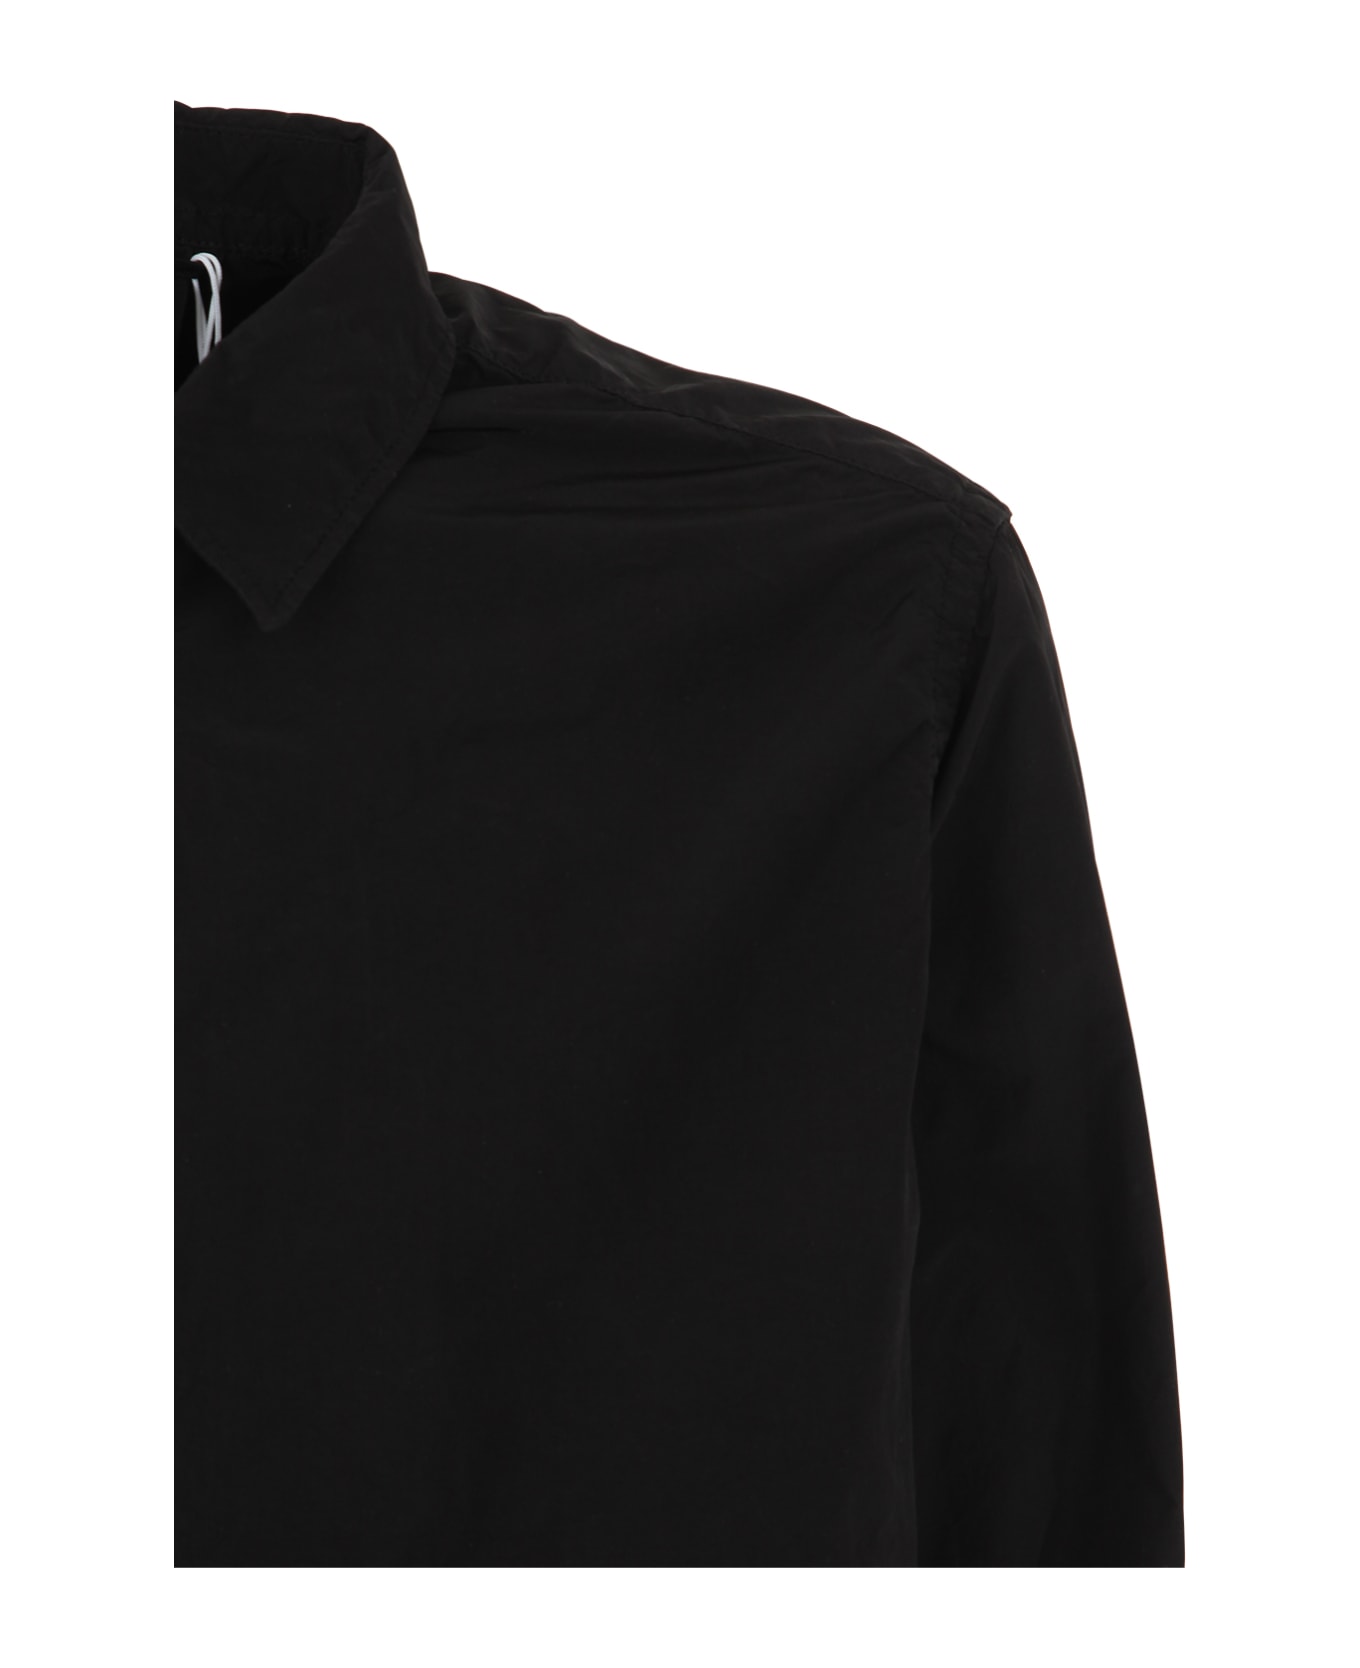 Aspesi Cassel Shirt - Black